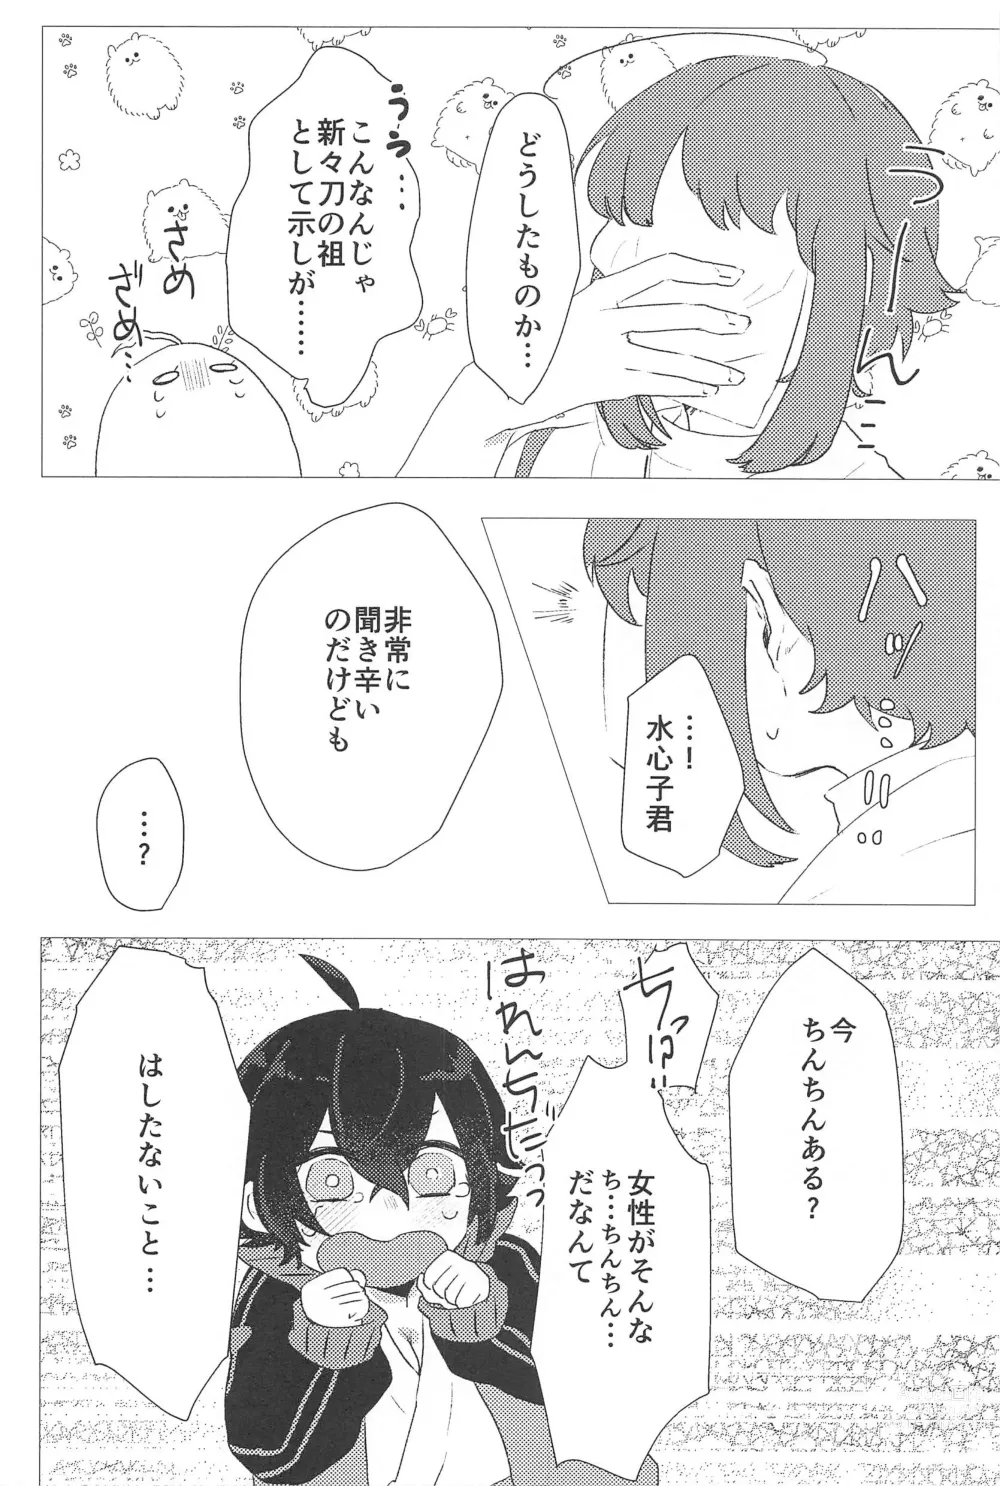 Page 9 of doujinshi Konnanotte Nai!